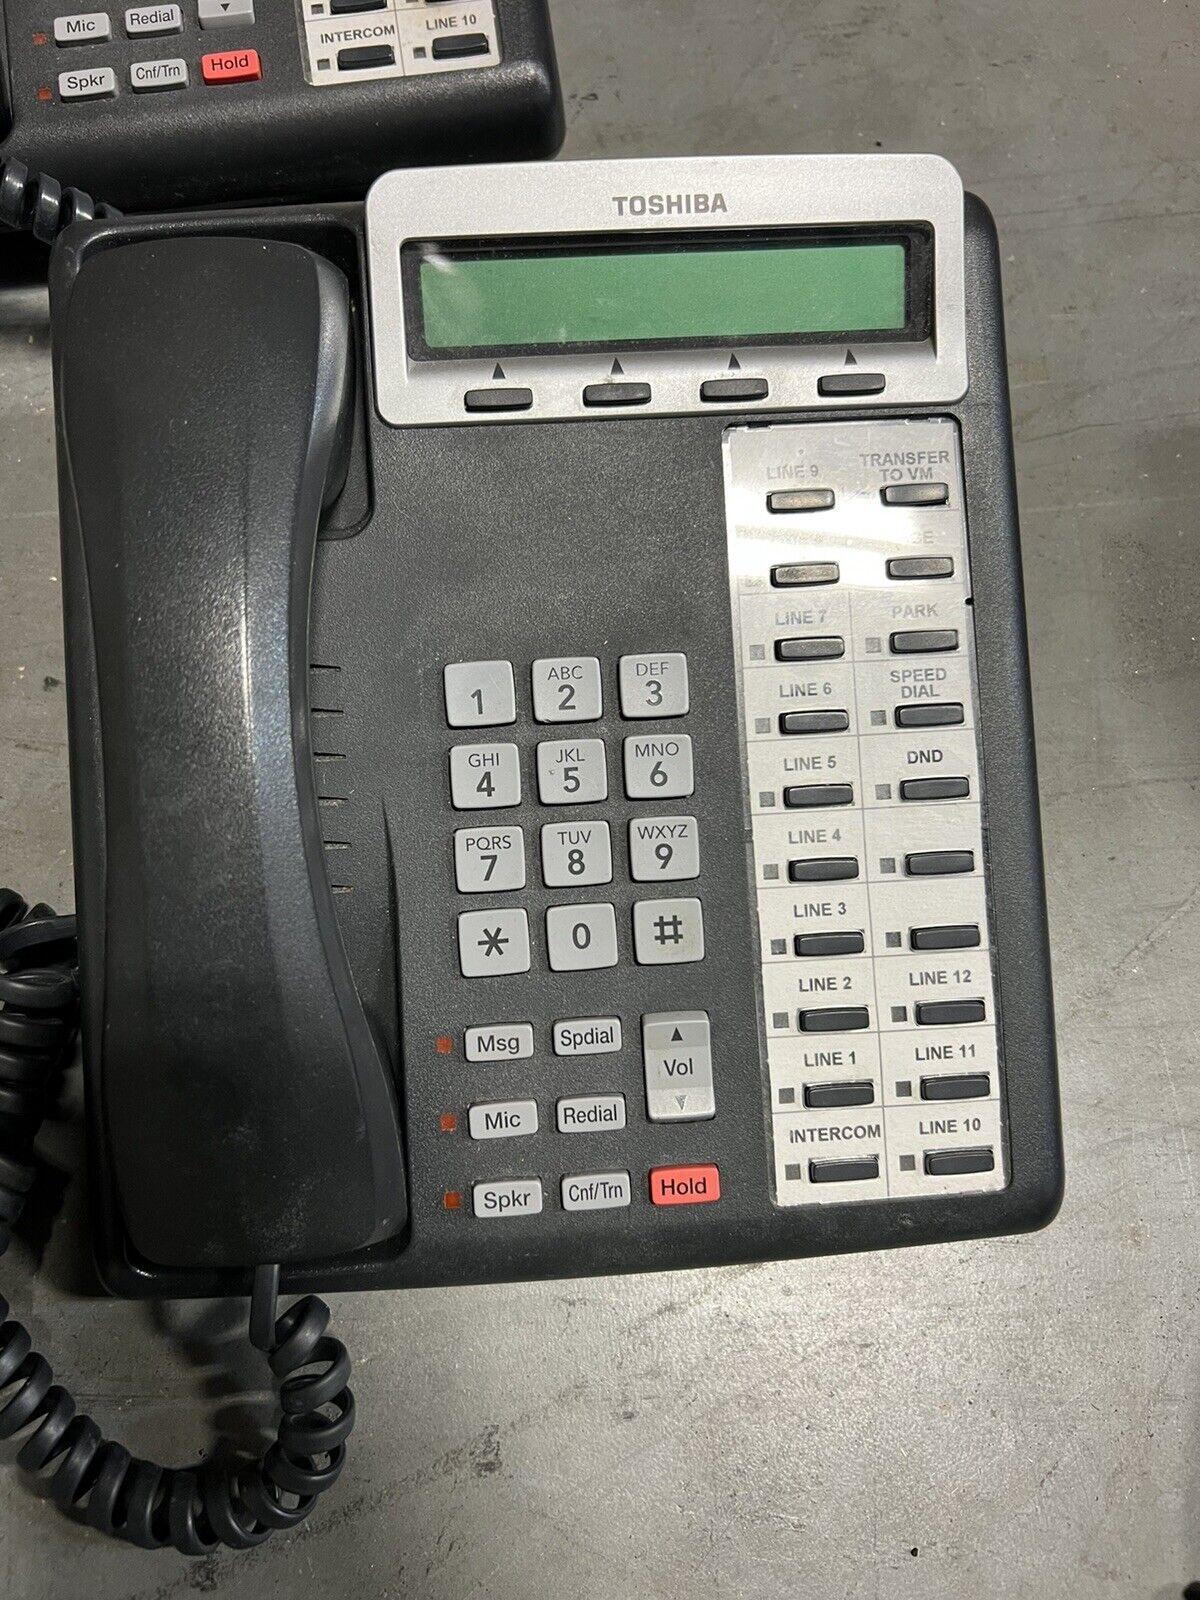 TOSHIBA Digital Business Telephone Model DKT3220-SD(WILL SELL AS